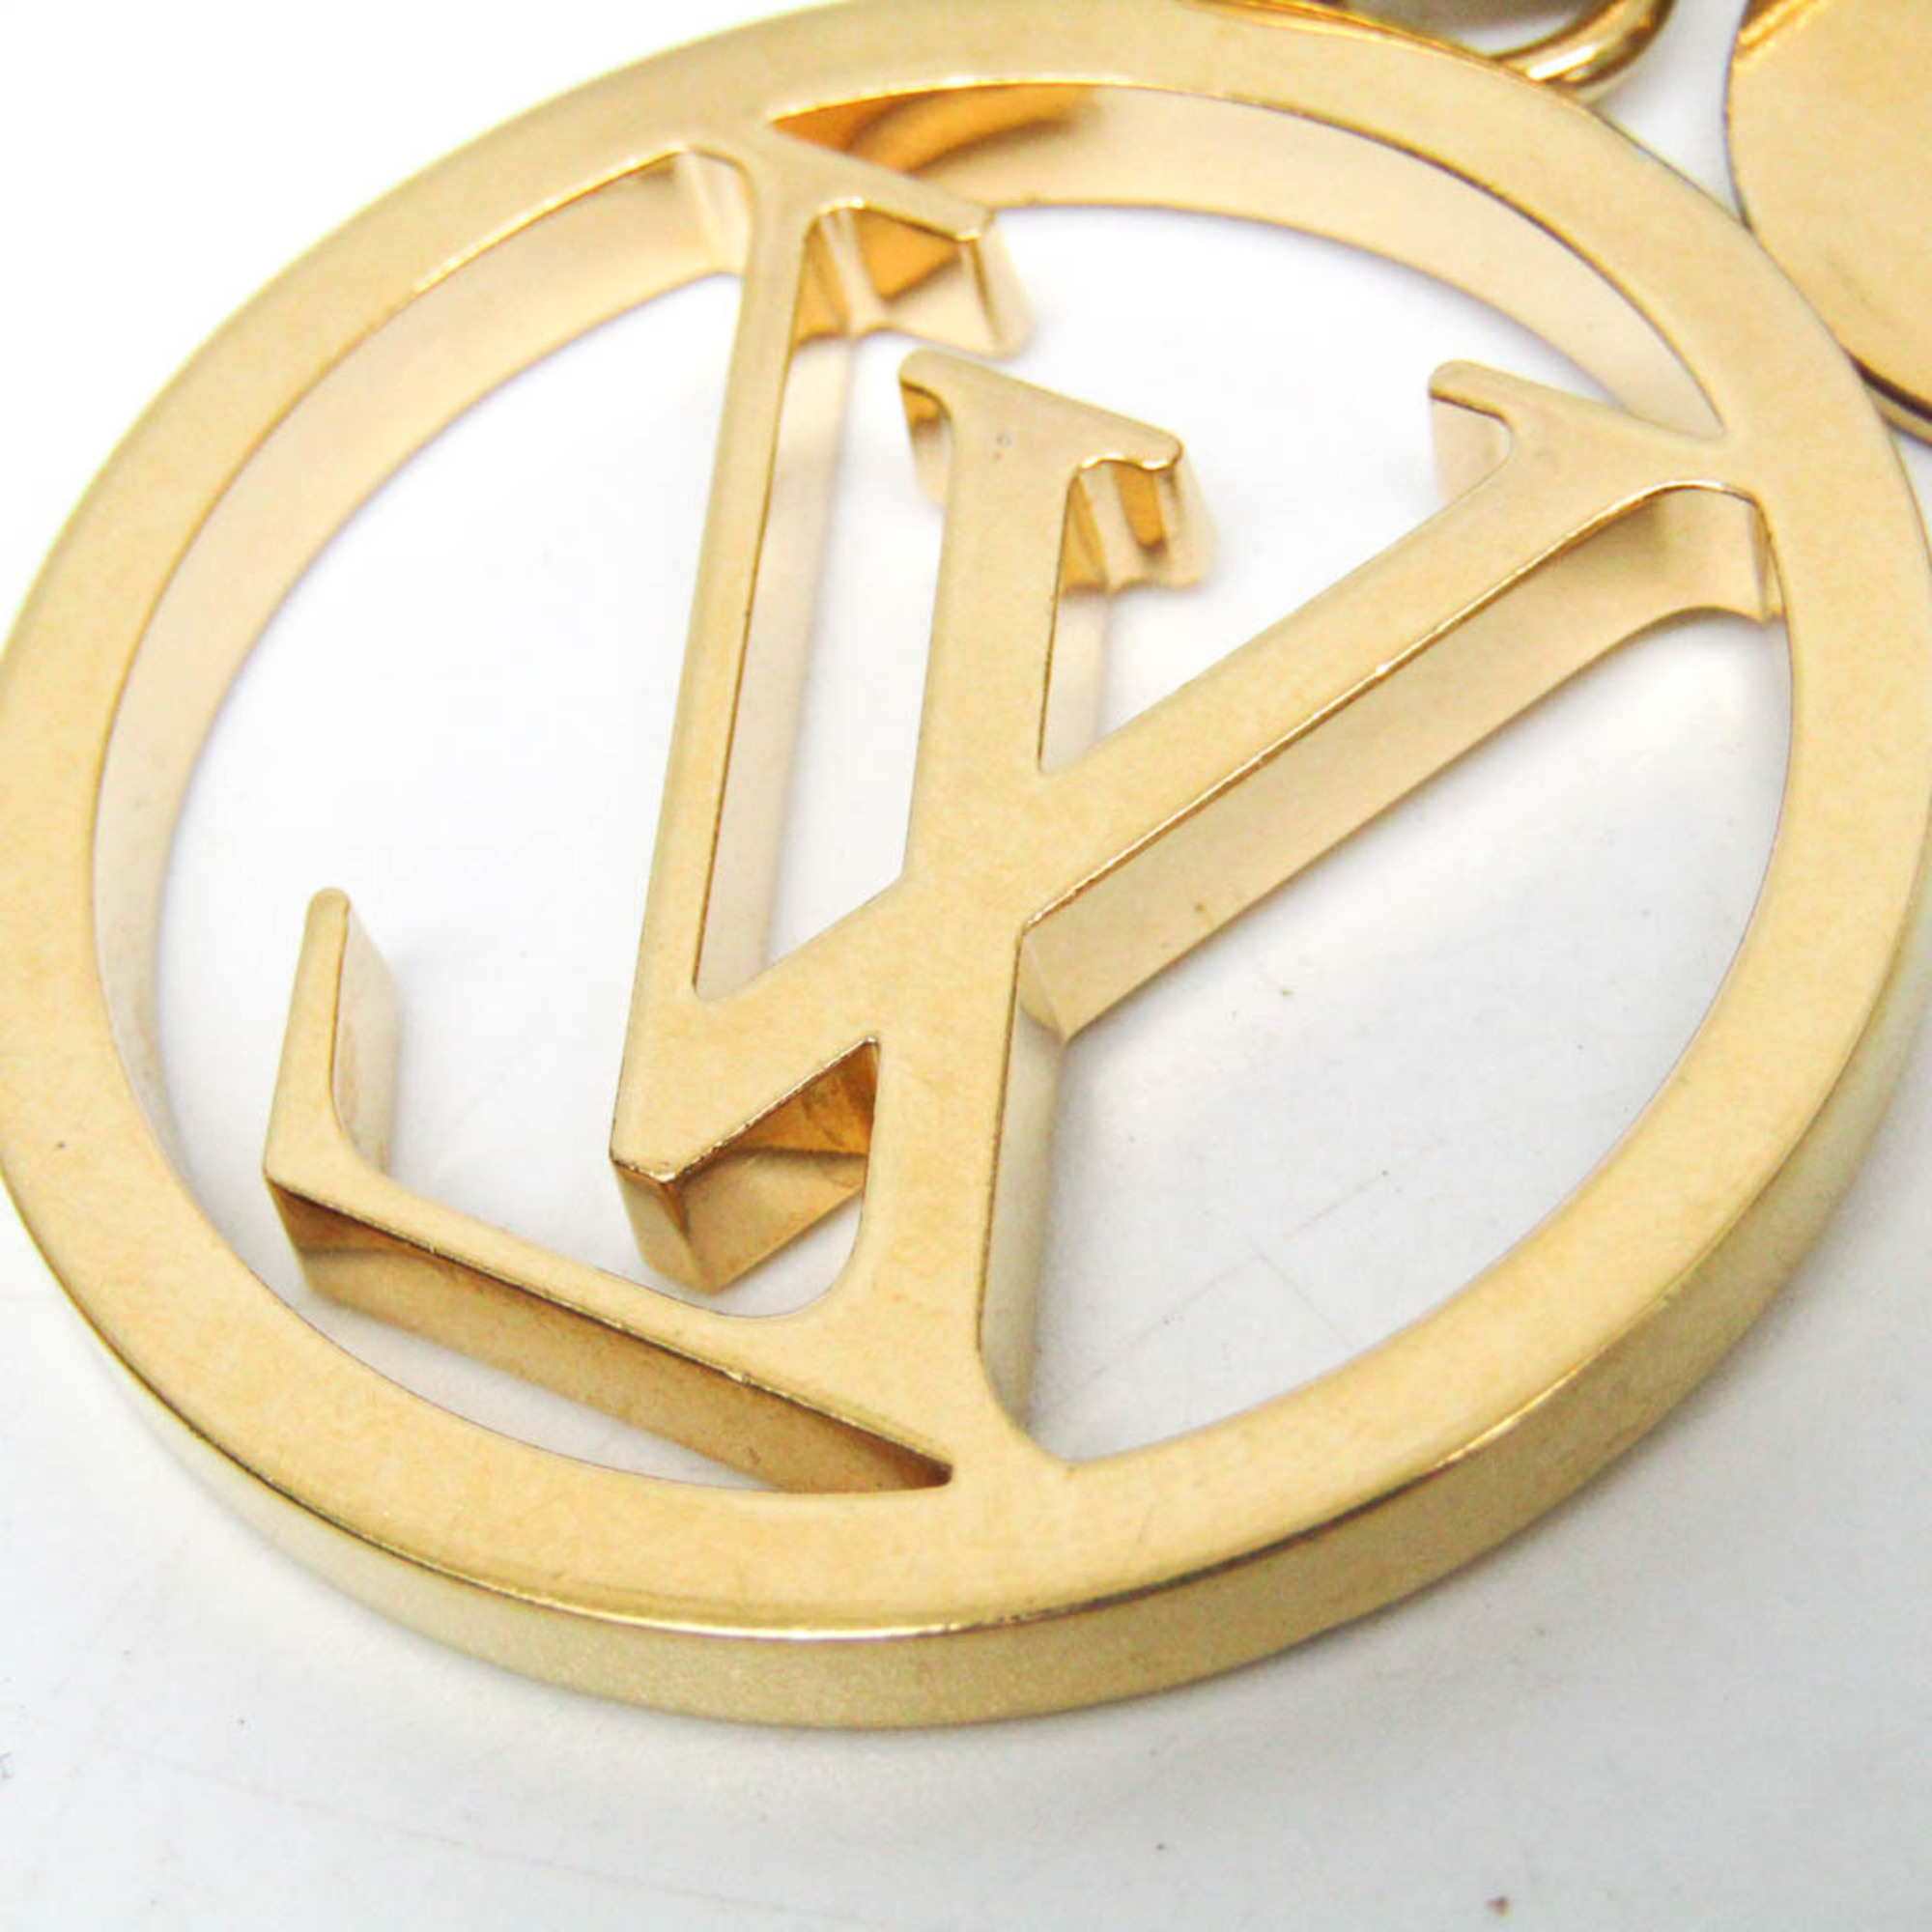 Louis Vuitton Bag Charm LV Circle M68000 Keyring (Gold)